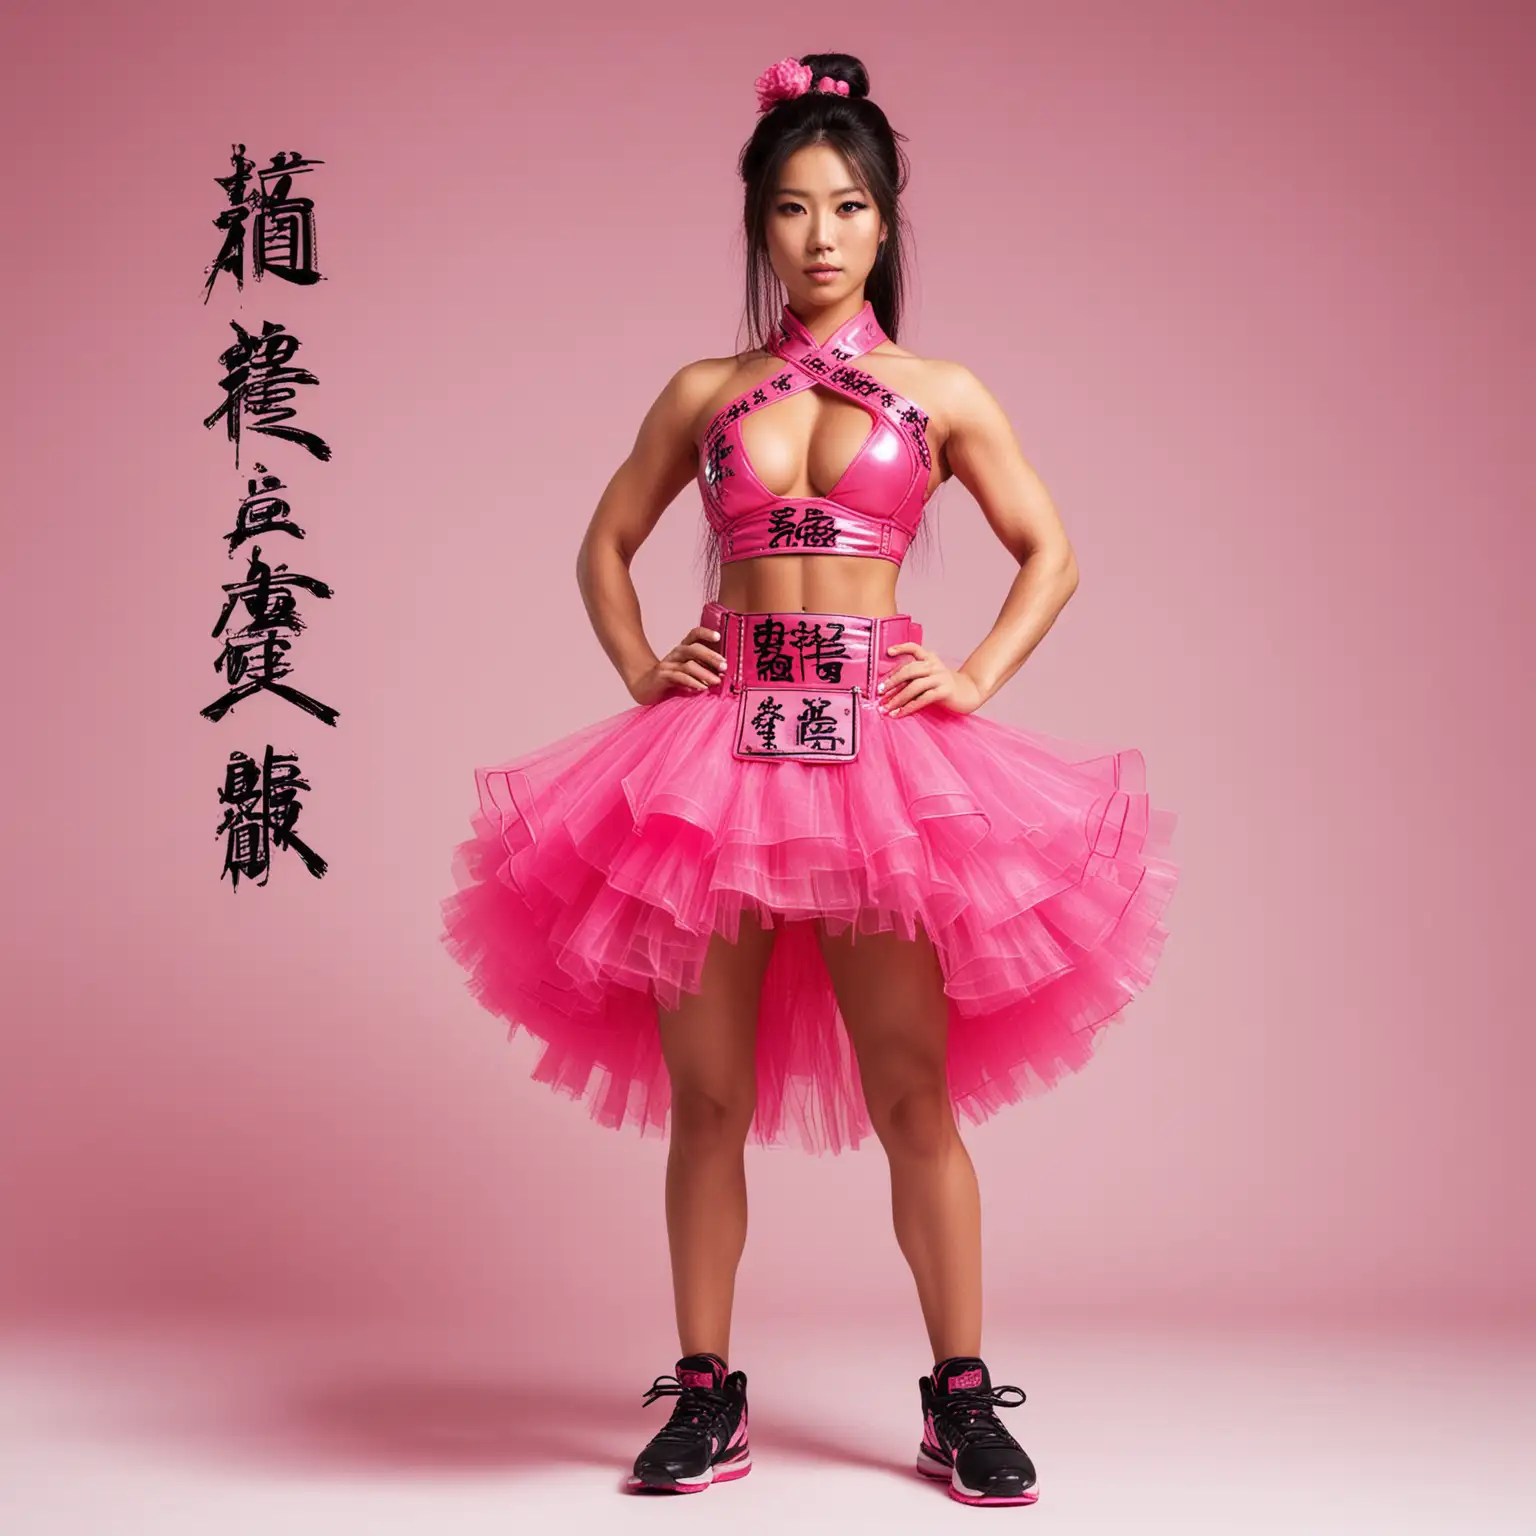 Japanese Bodybuilder Supermodel in Hot Pink Samurai Armor and Tutu